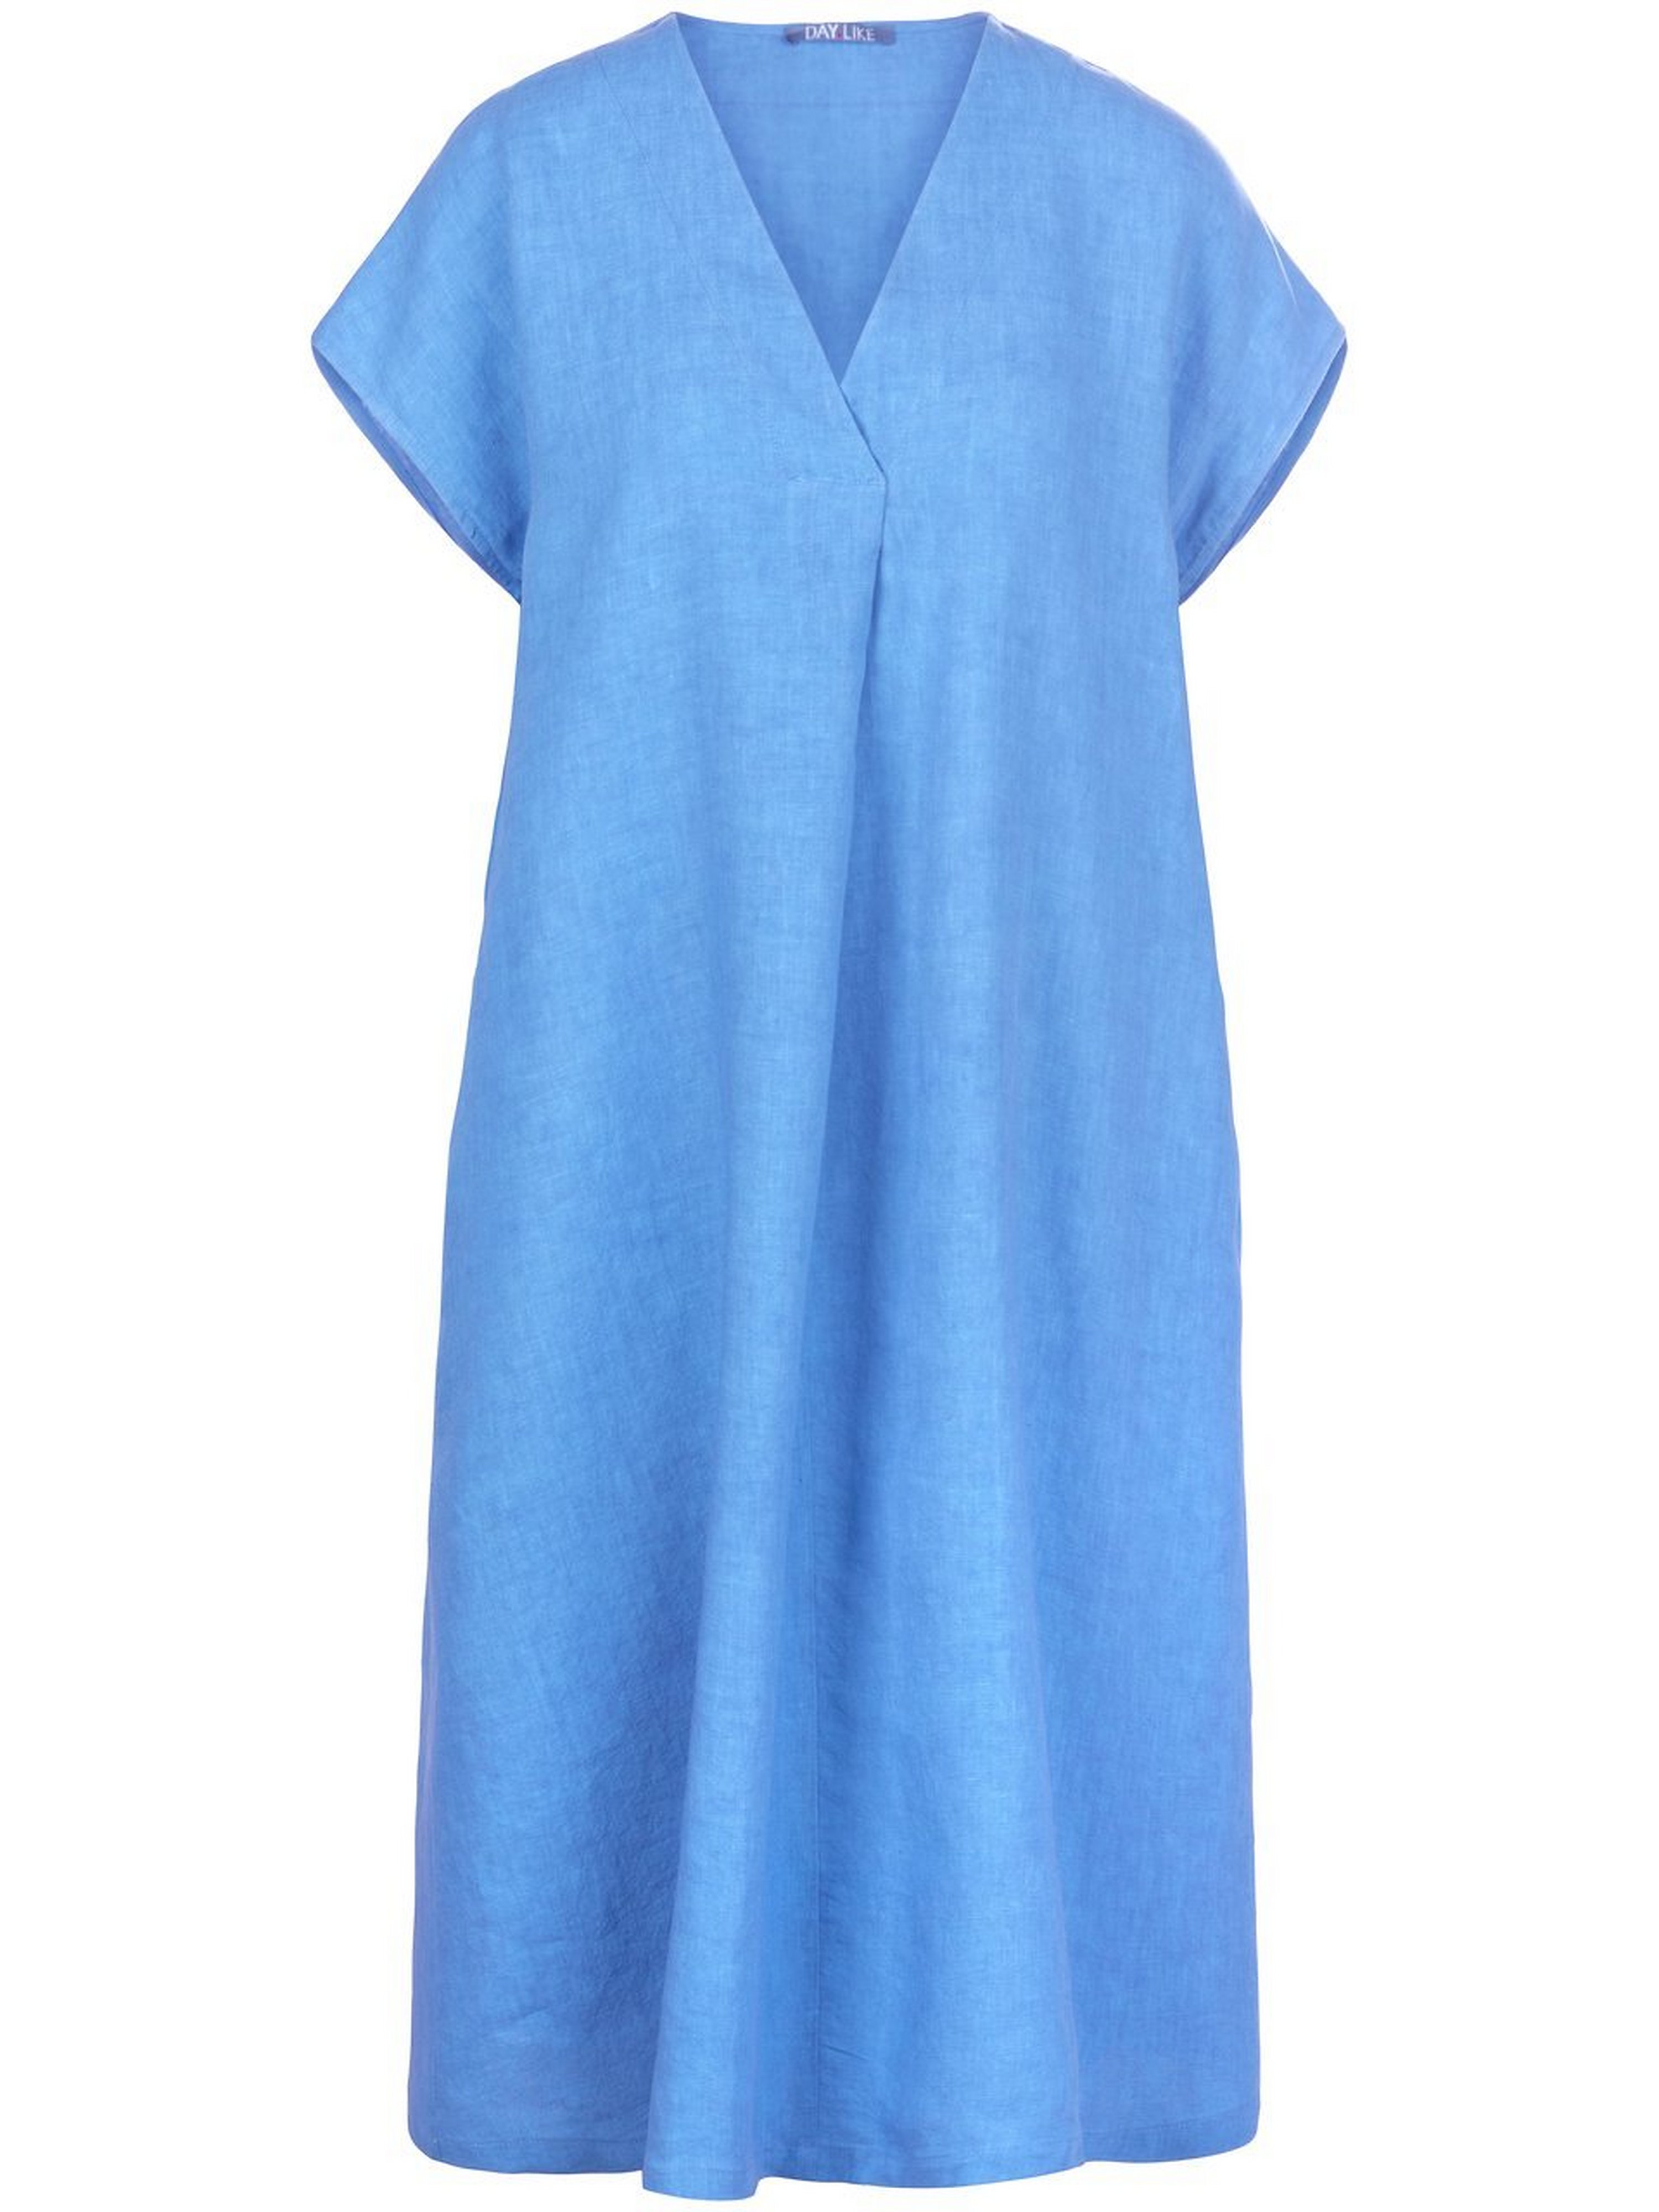 La robe 100% lin  DAY.LIKE bleu taille 44